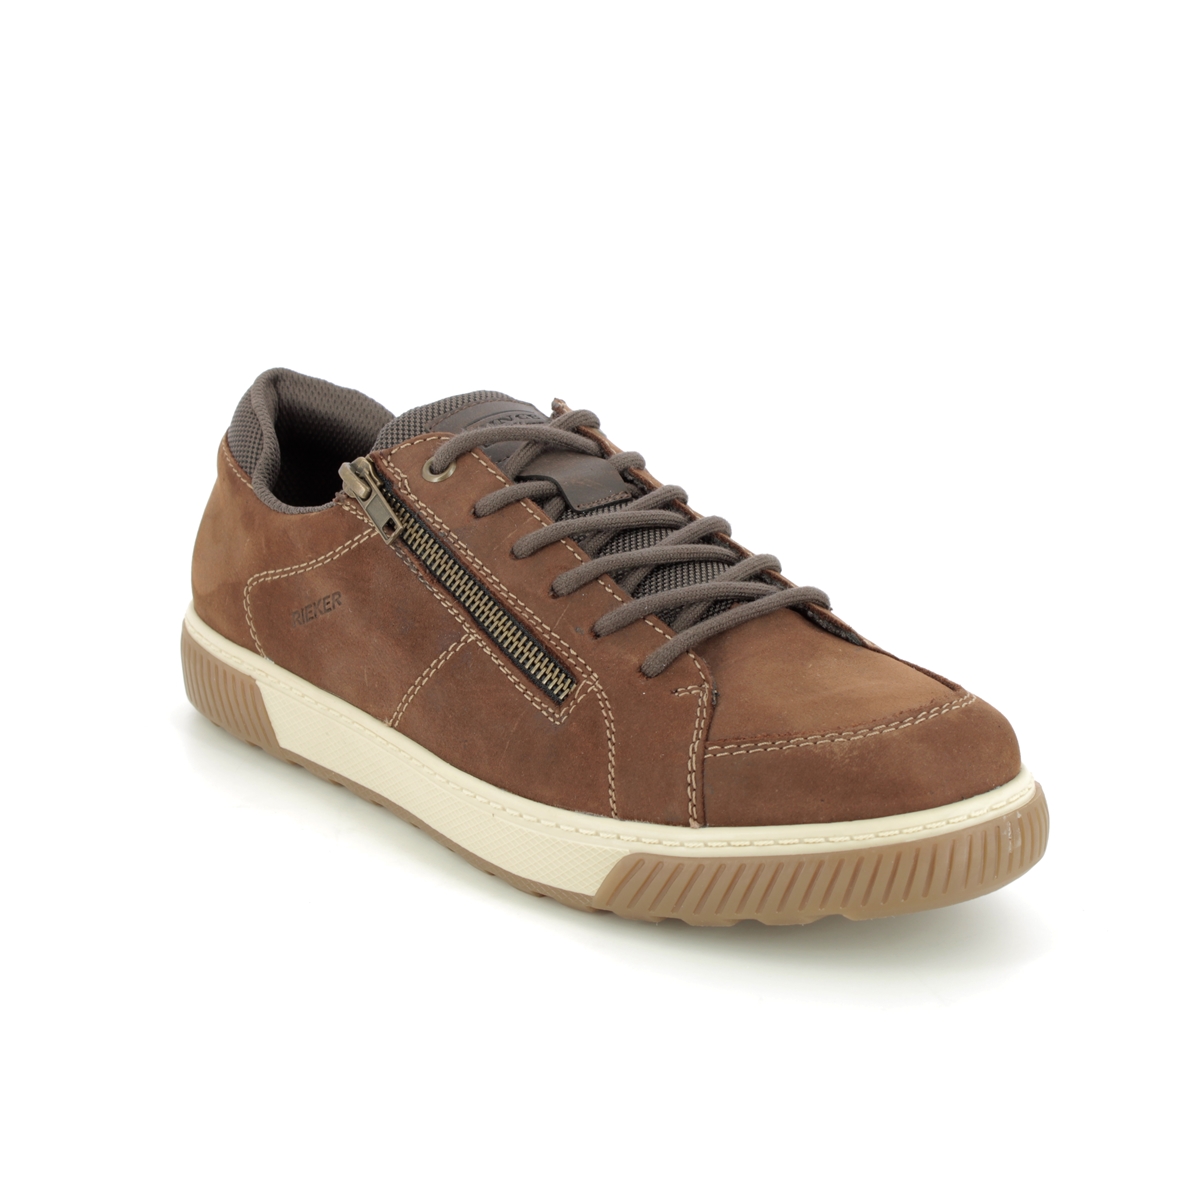 Rieker Urbanzi Tan Suede Mens Comfort Shoes 18910-22 In Size 45 In Plain Tan Suede